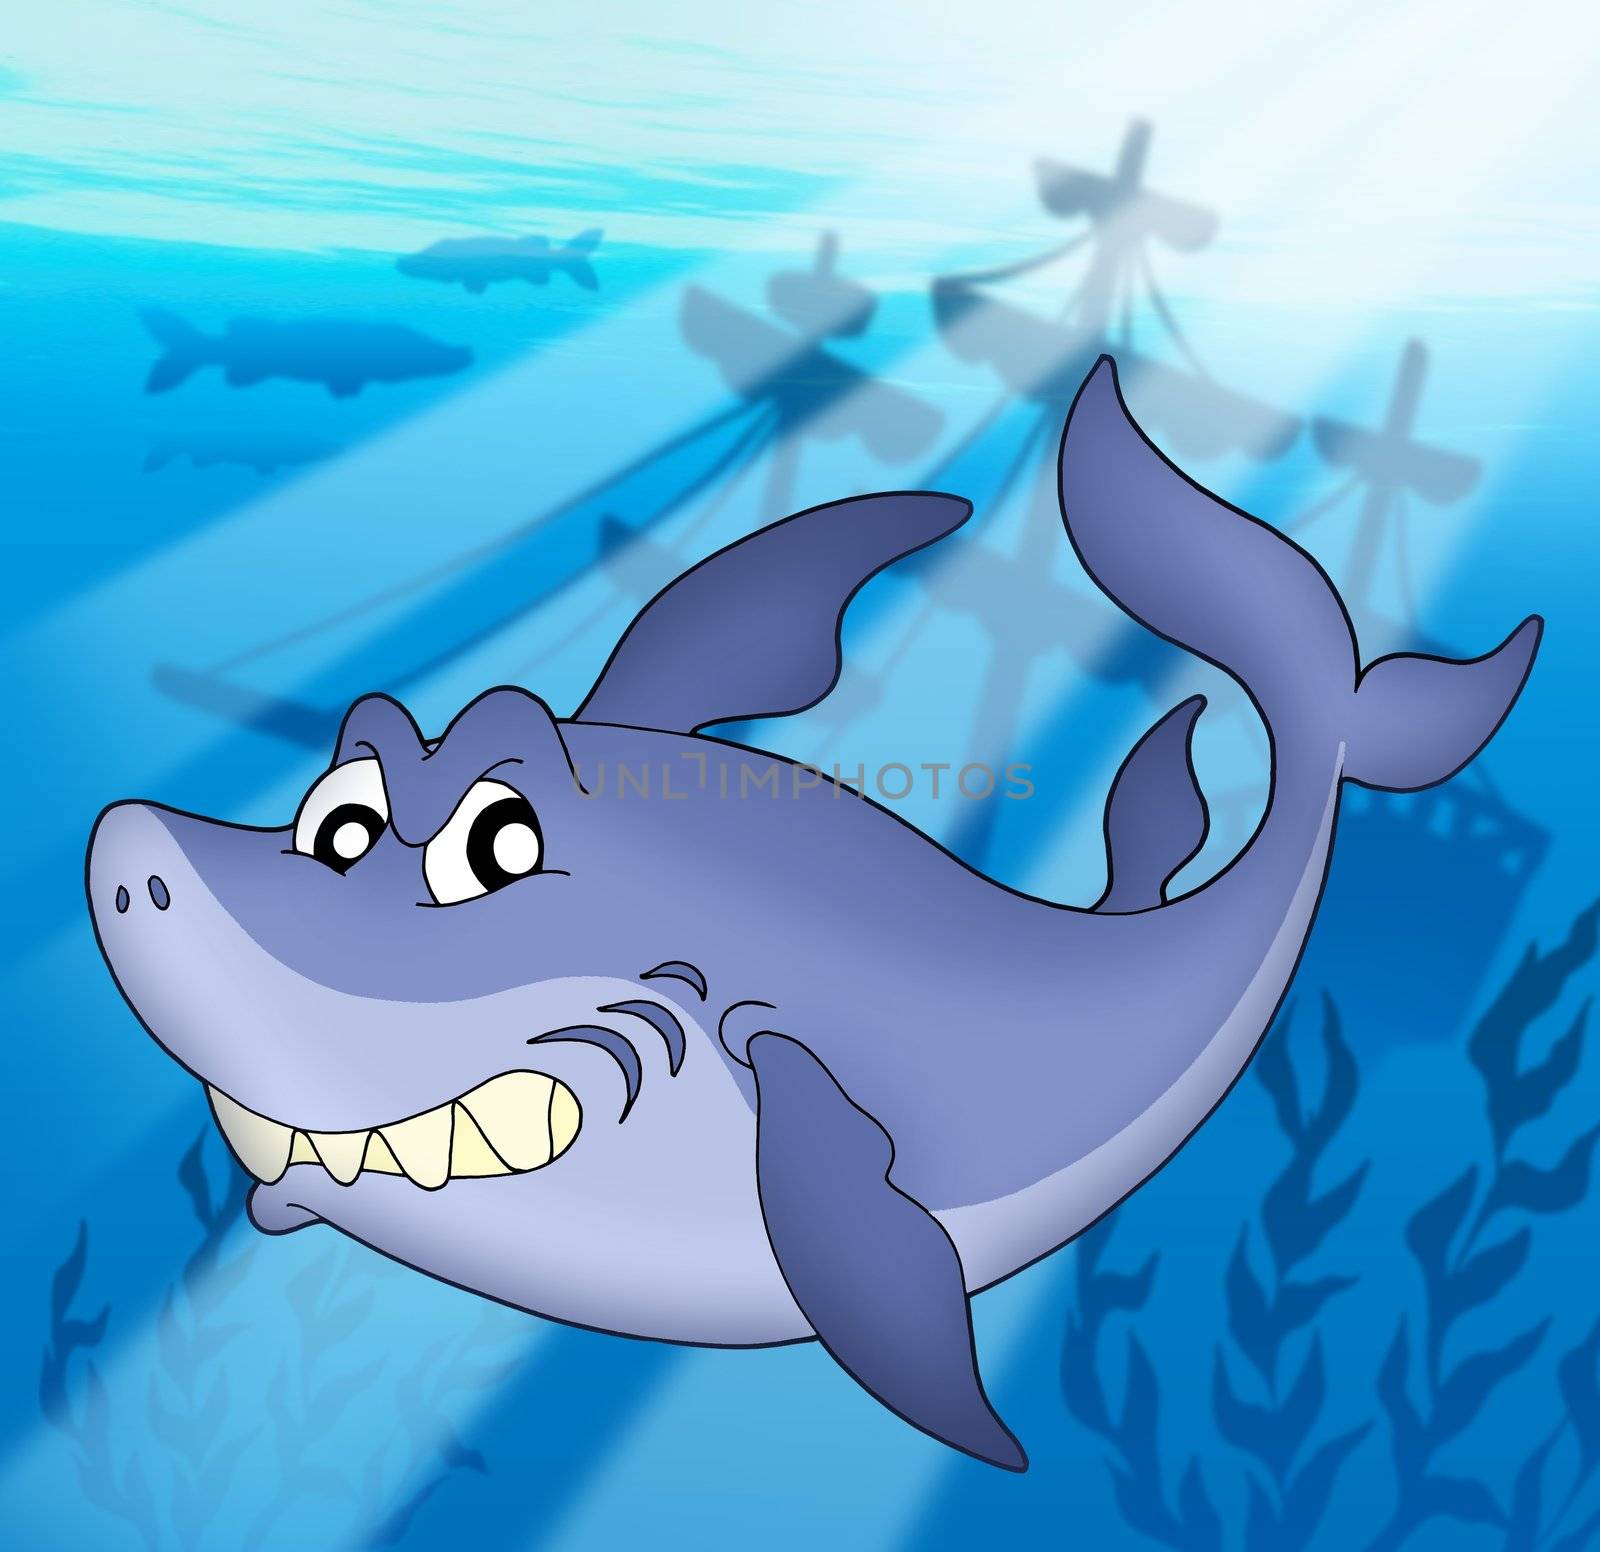 Shark with shipwreck - color illustration.